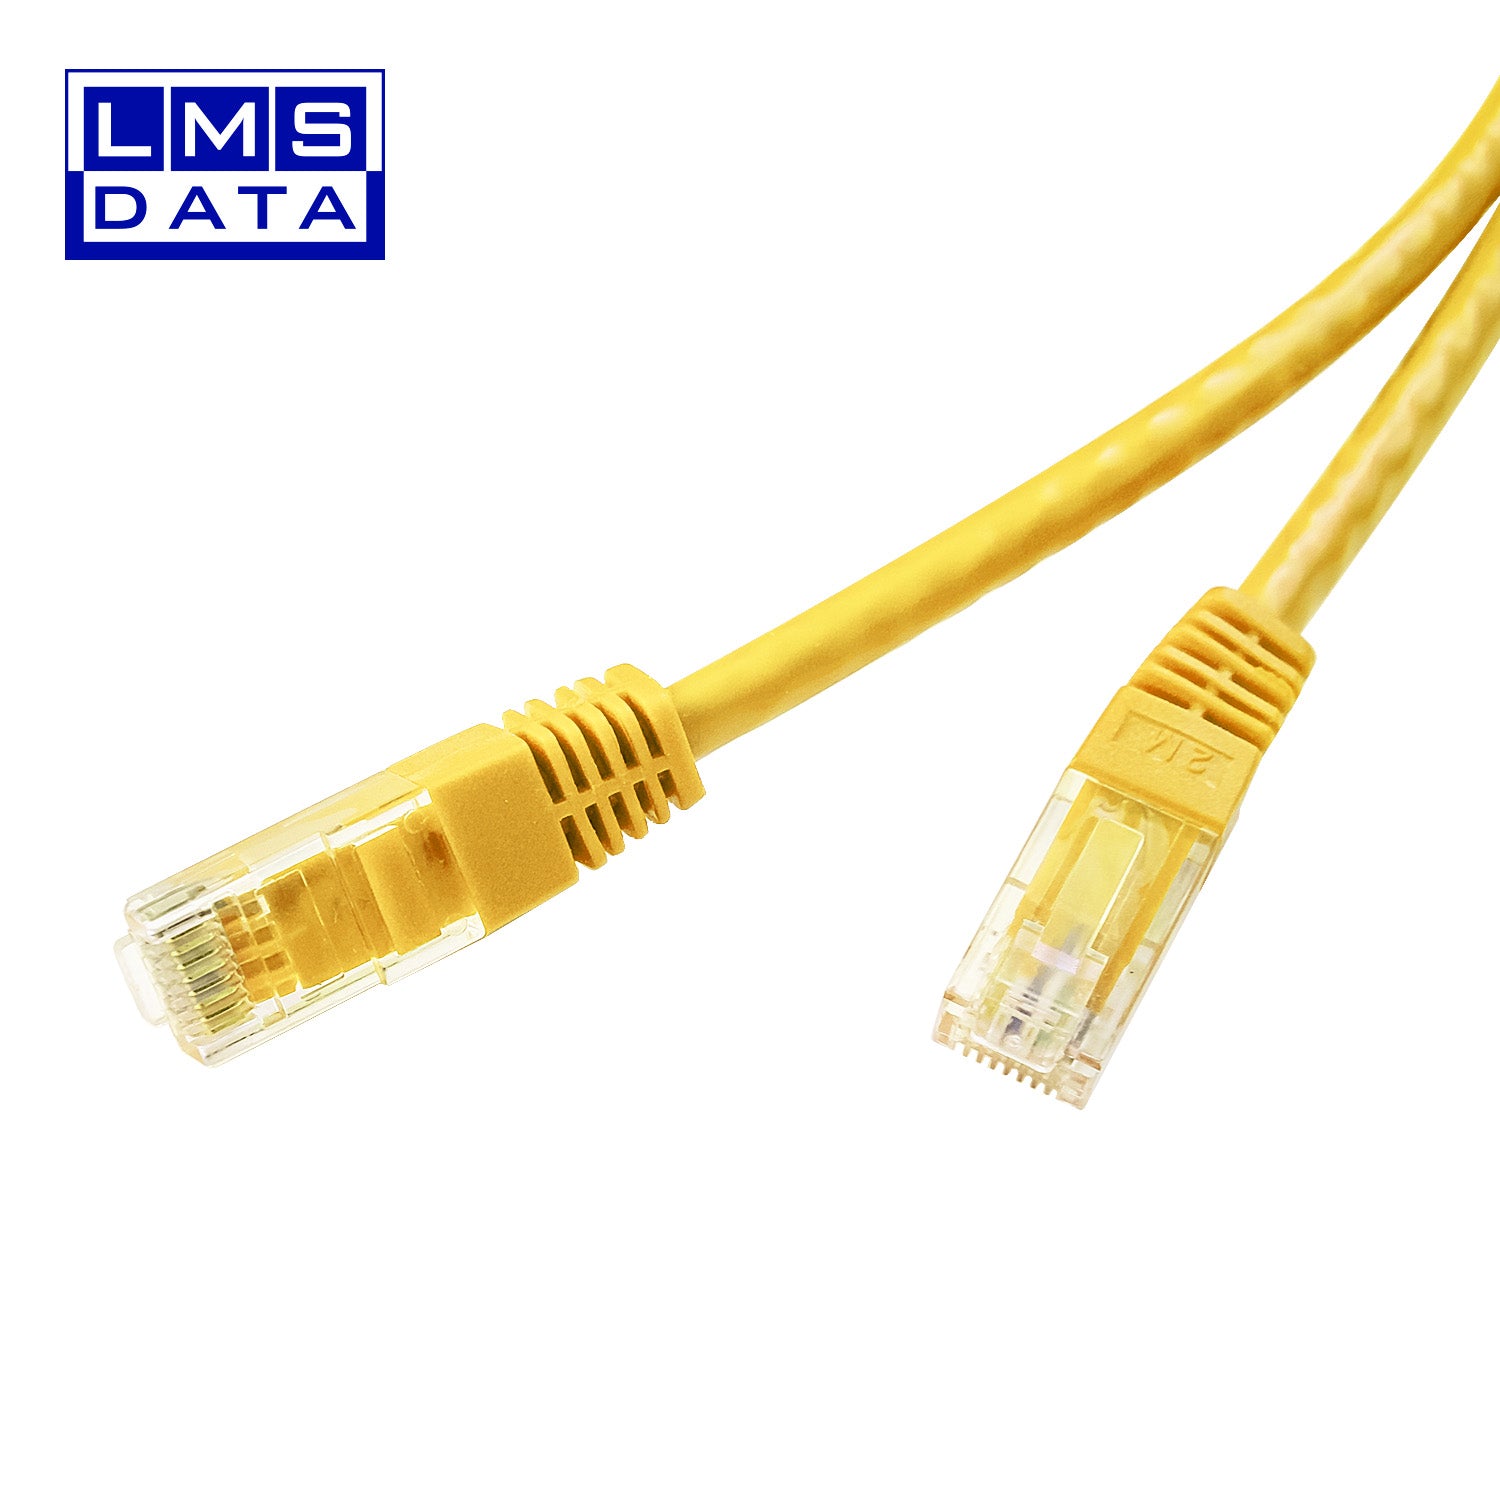 cable rj45 cat 5e 20m yellow colour